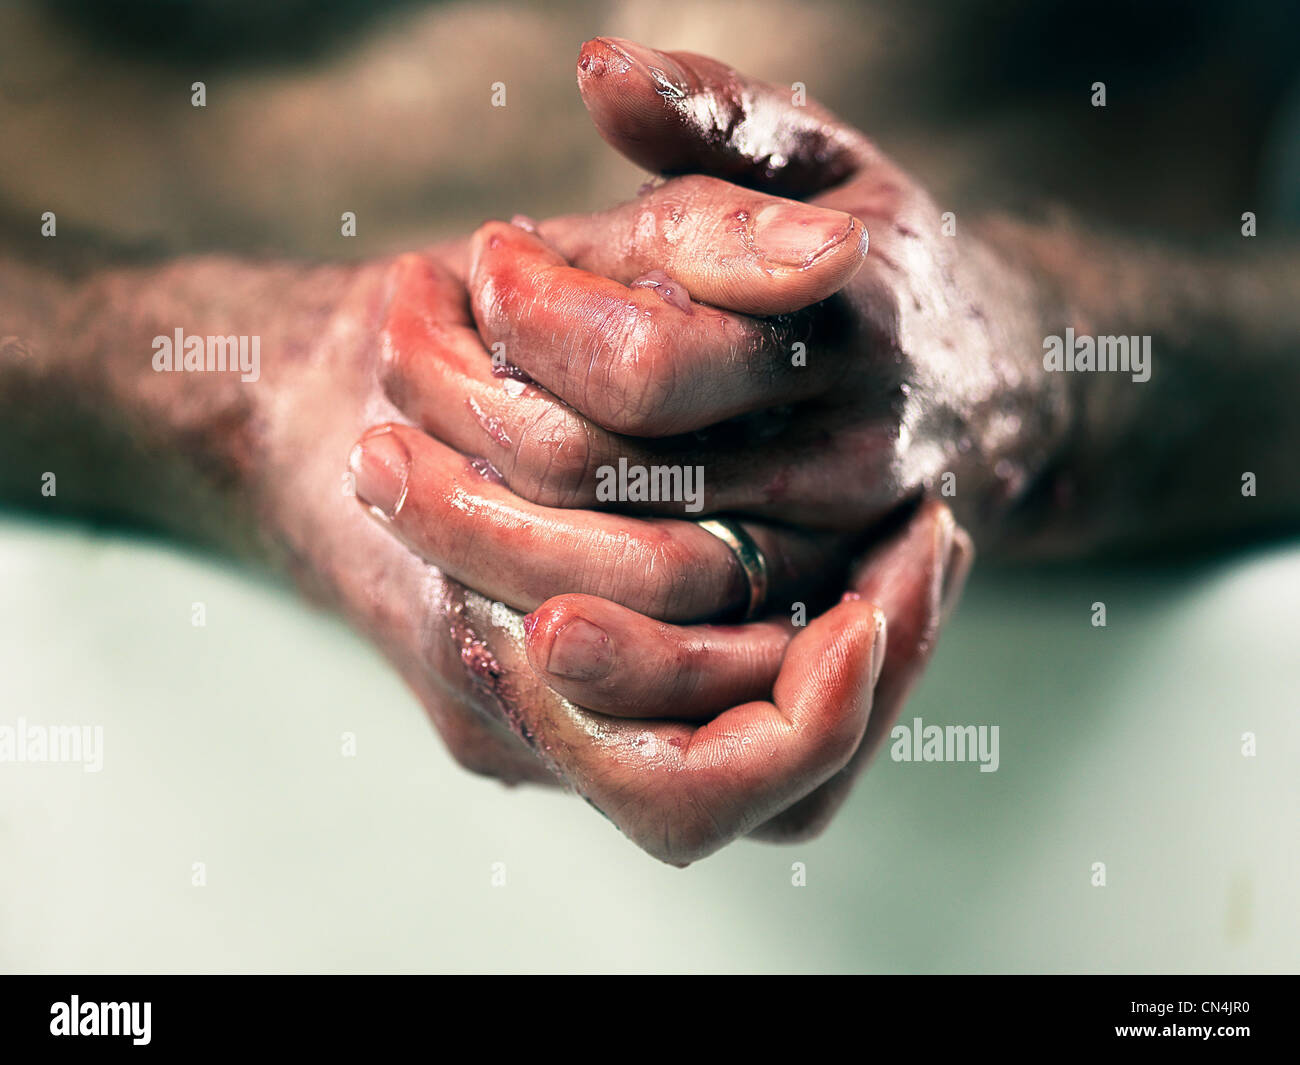 Fishmonger washing bloodied hands Stock Photo